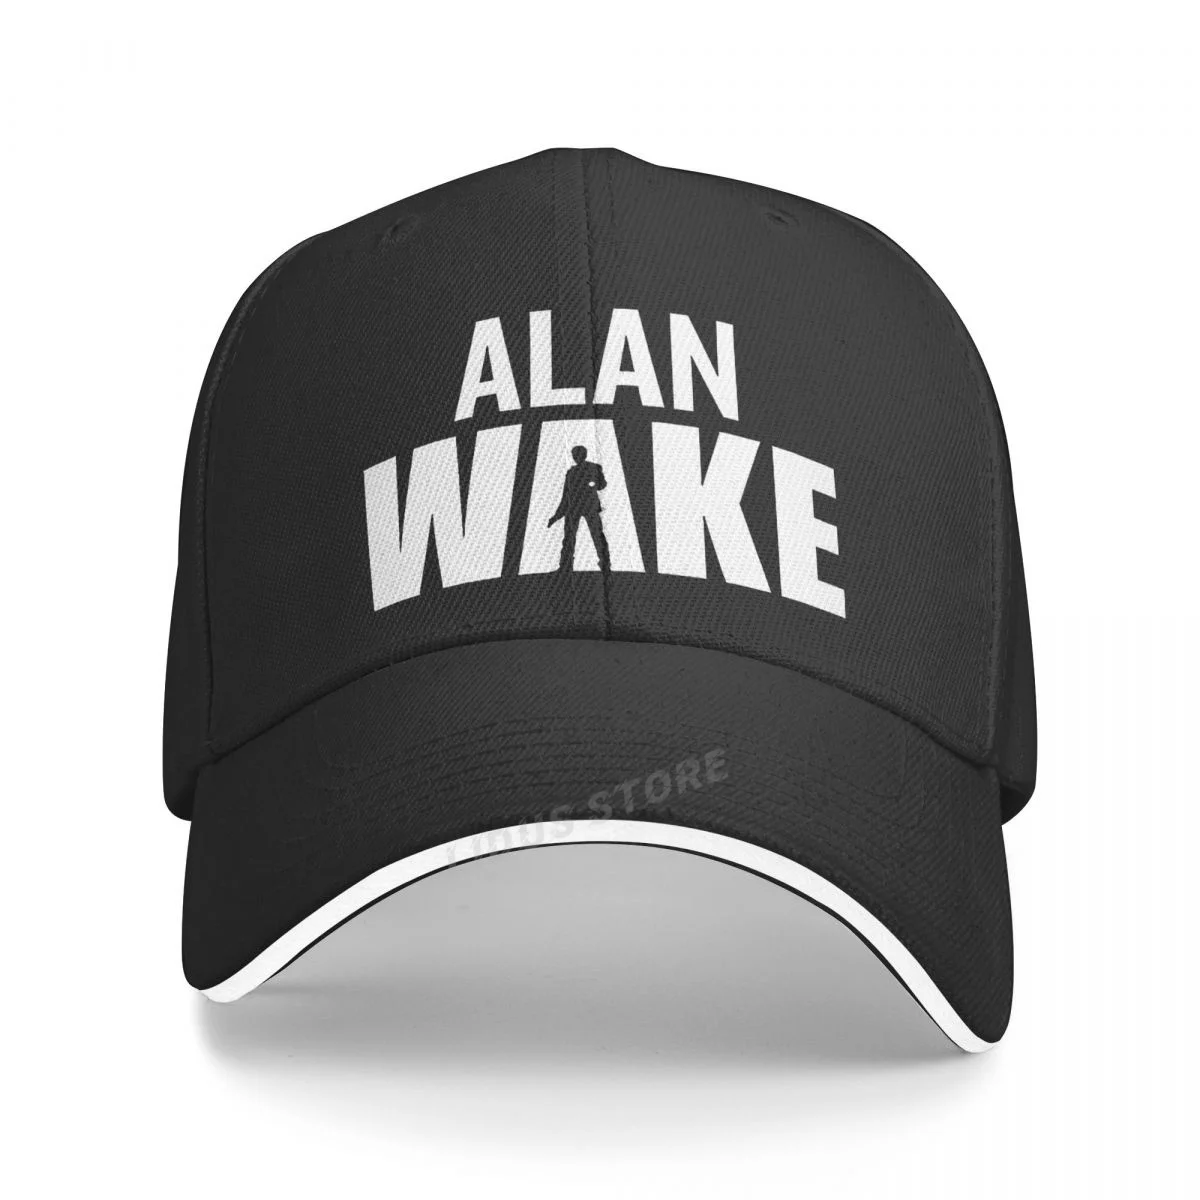 ALAN WAKE Summer New 100% Cotton Baseball Cap High Quality Trends Cool Summer Sun Caps Adjustable Hip Hop Hat Snapback